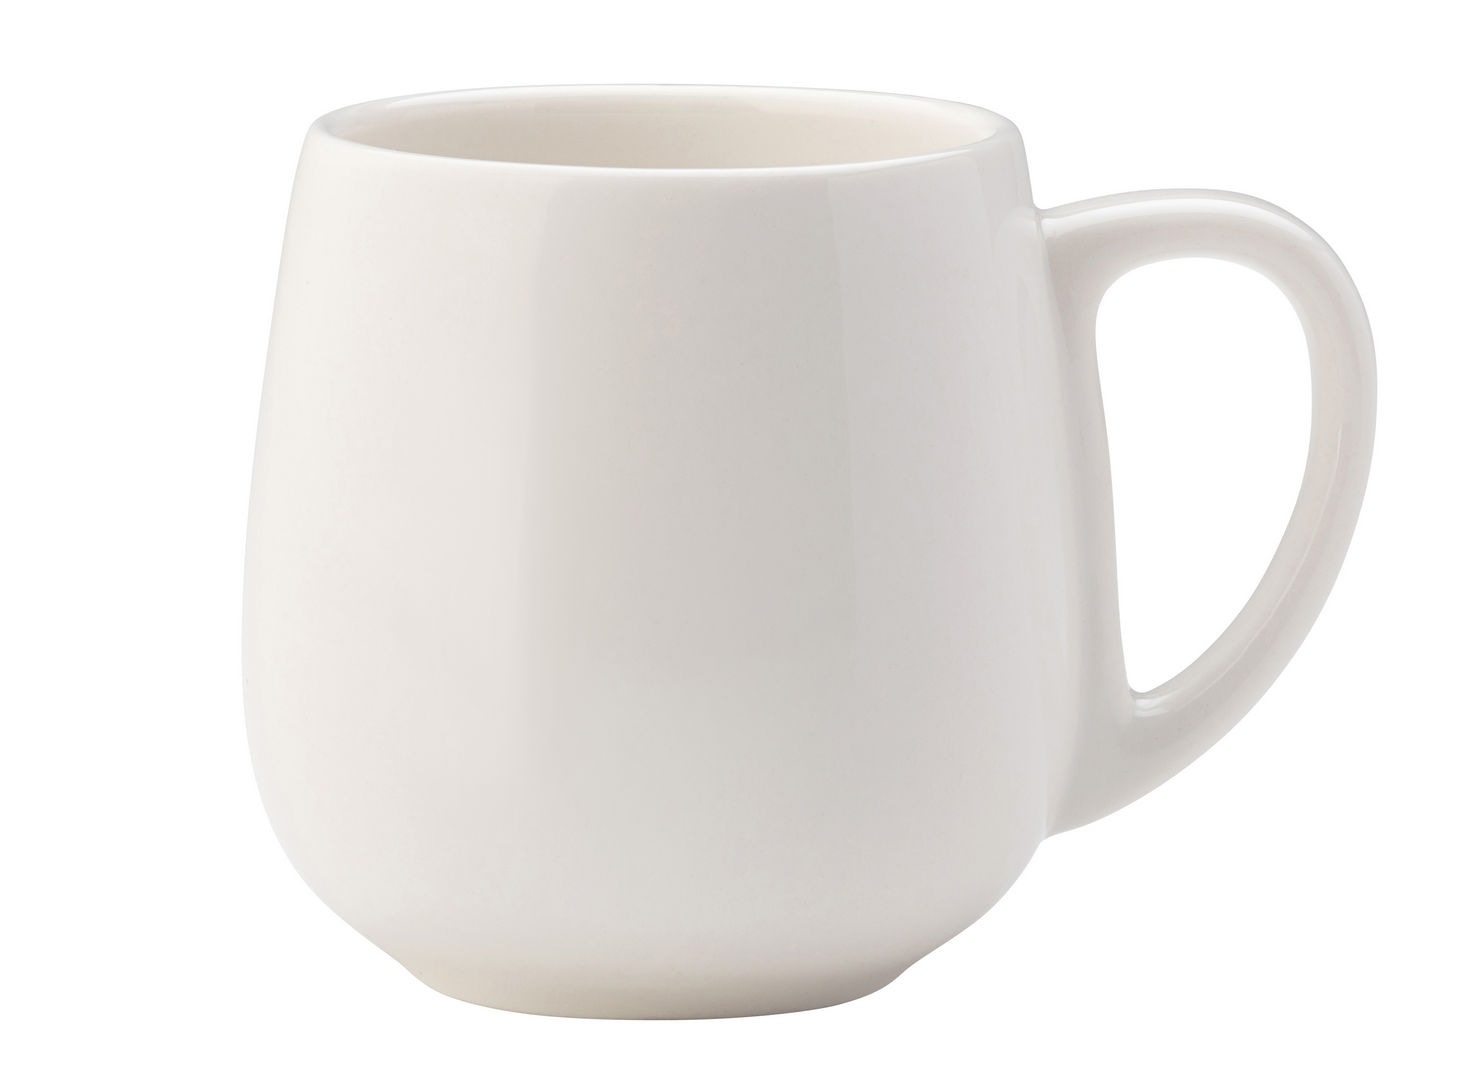 Barista White Mug 15oz (42cl) - CT9023-000000-B01006 (Pack of 6)